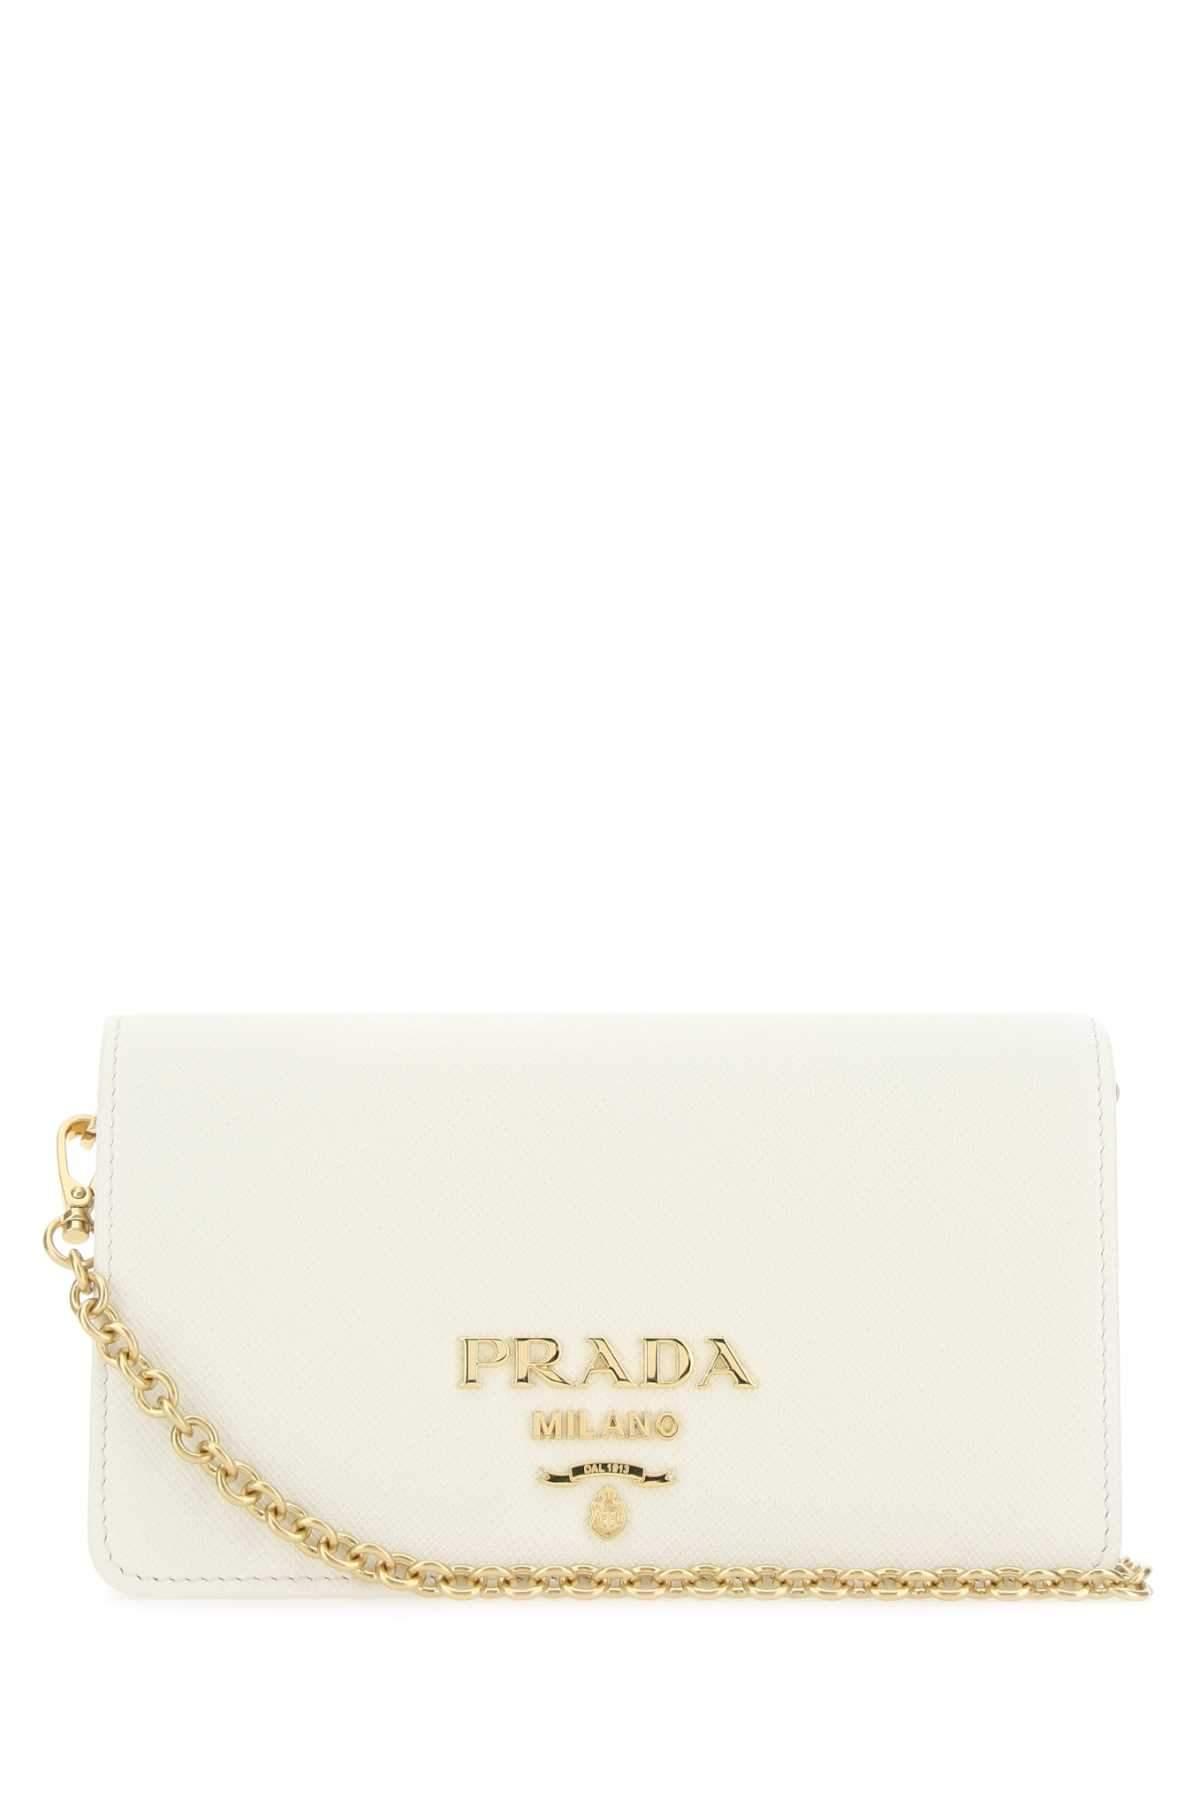 prada pink bag gold chain